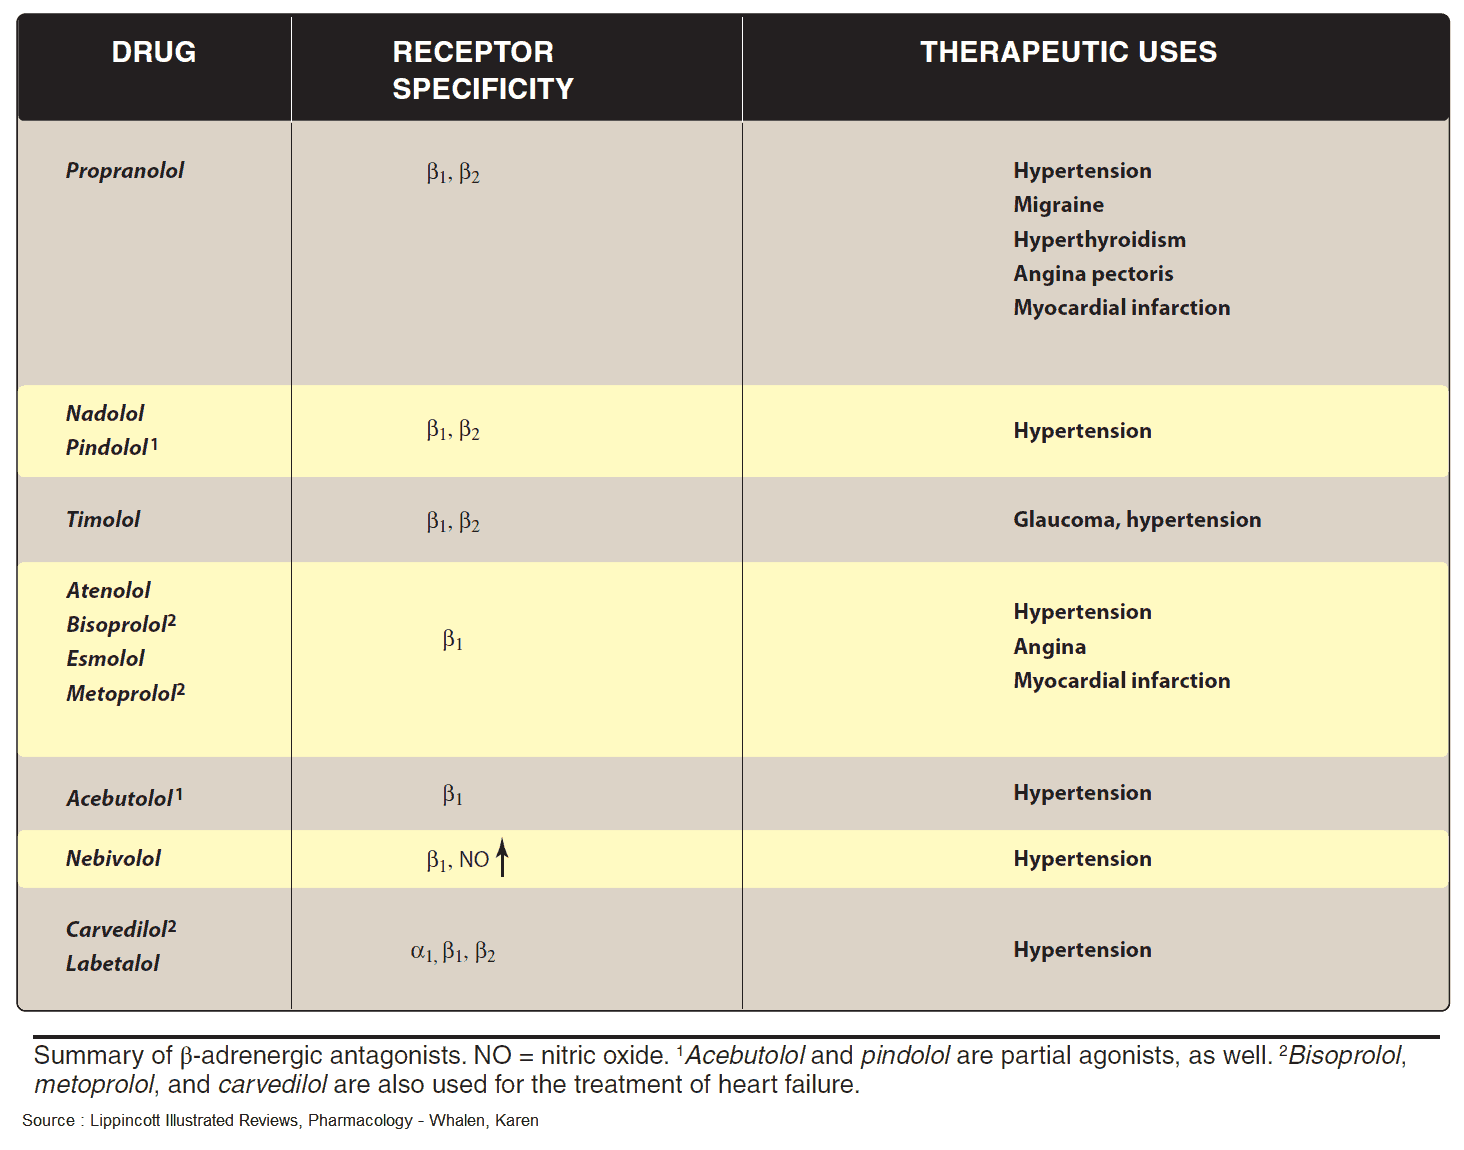 Summary of Beta-adrenergic antagonists (Beta Blockers)